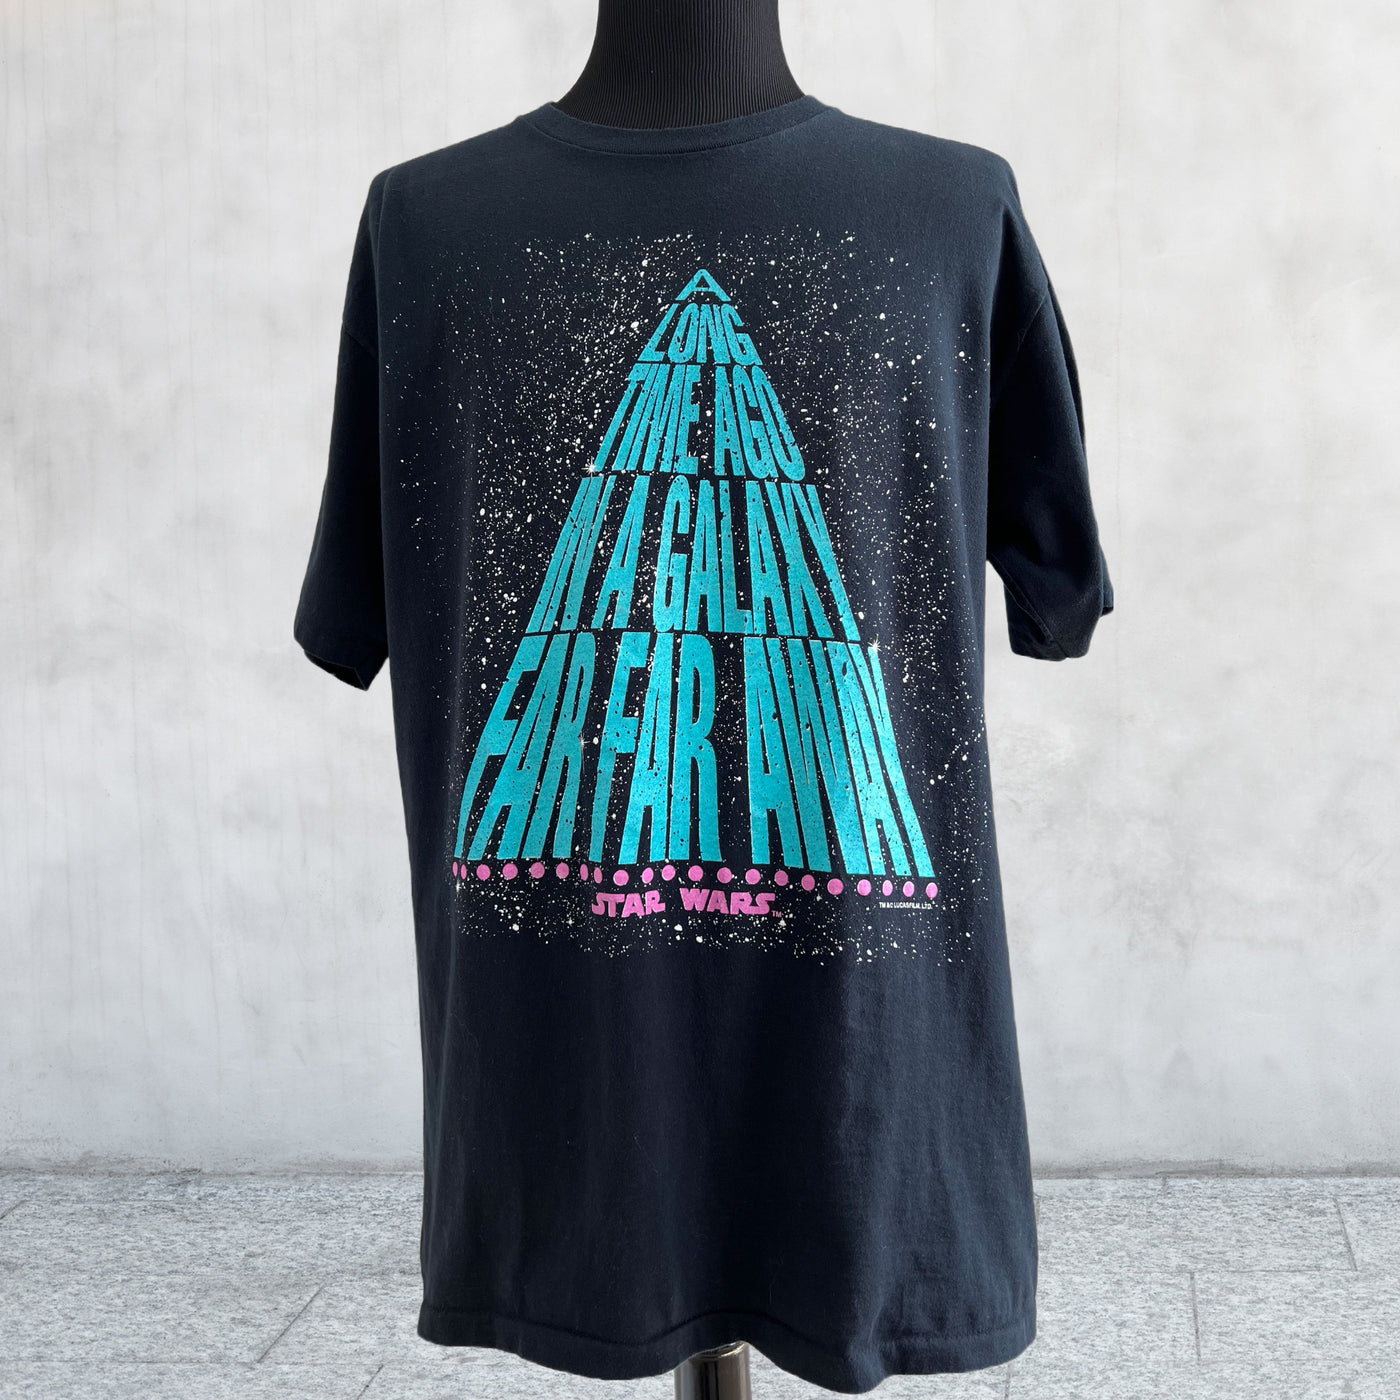 Vintage 80s Star Wars Shirt "A Long Time A Ago In A Galaxy Far Far Away" shirt front view